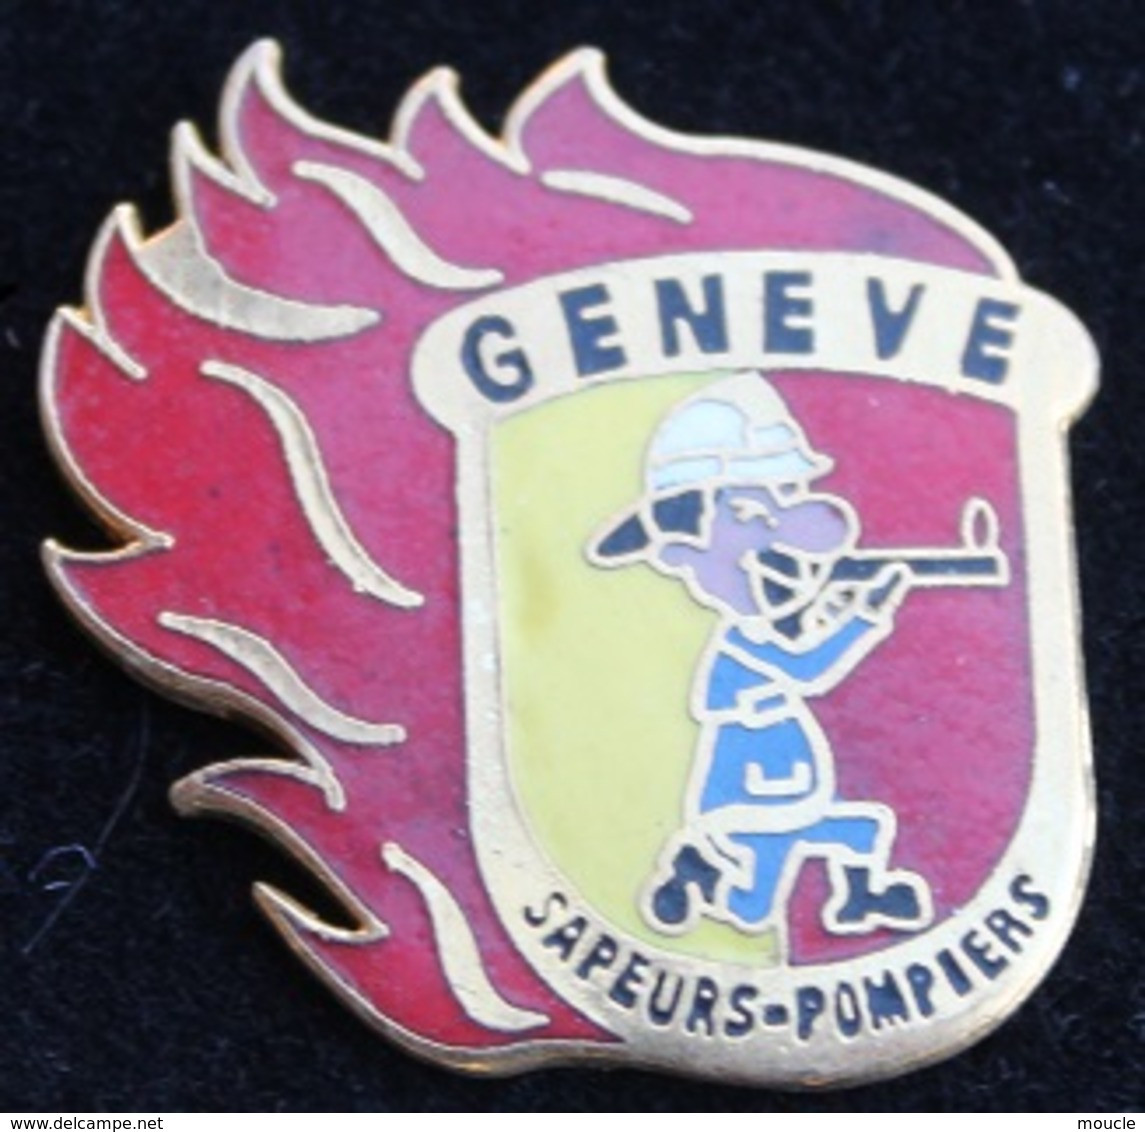 TIR -  SAPEURS POMPIERS DE LA VILLE GENEVE - SUISSE-SCHWEIZER FEUERWEHRMANN-FIREFIGHTER SWISS -   (21) - Firemen